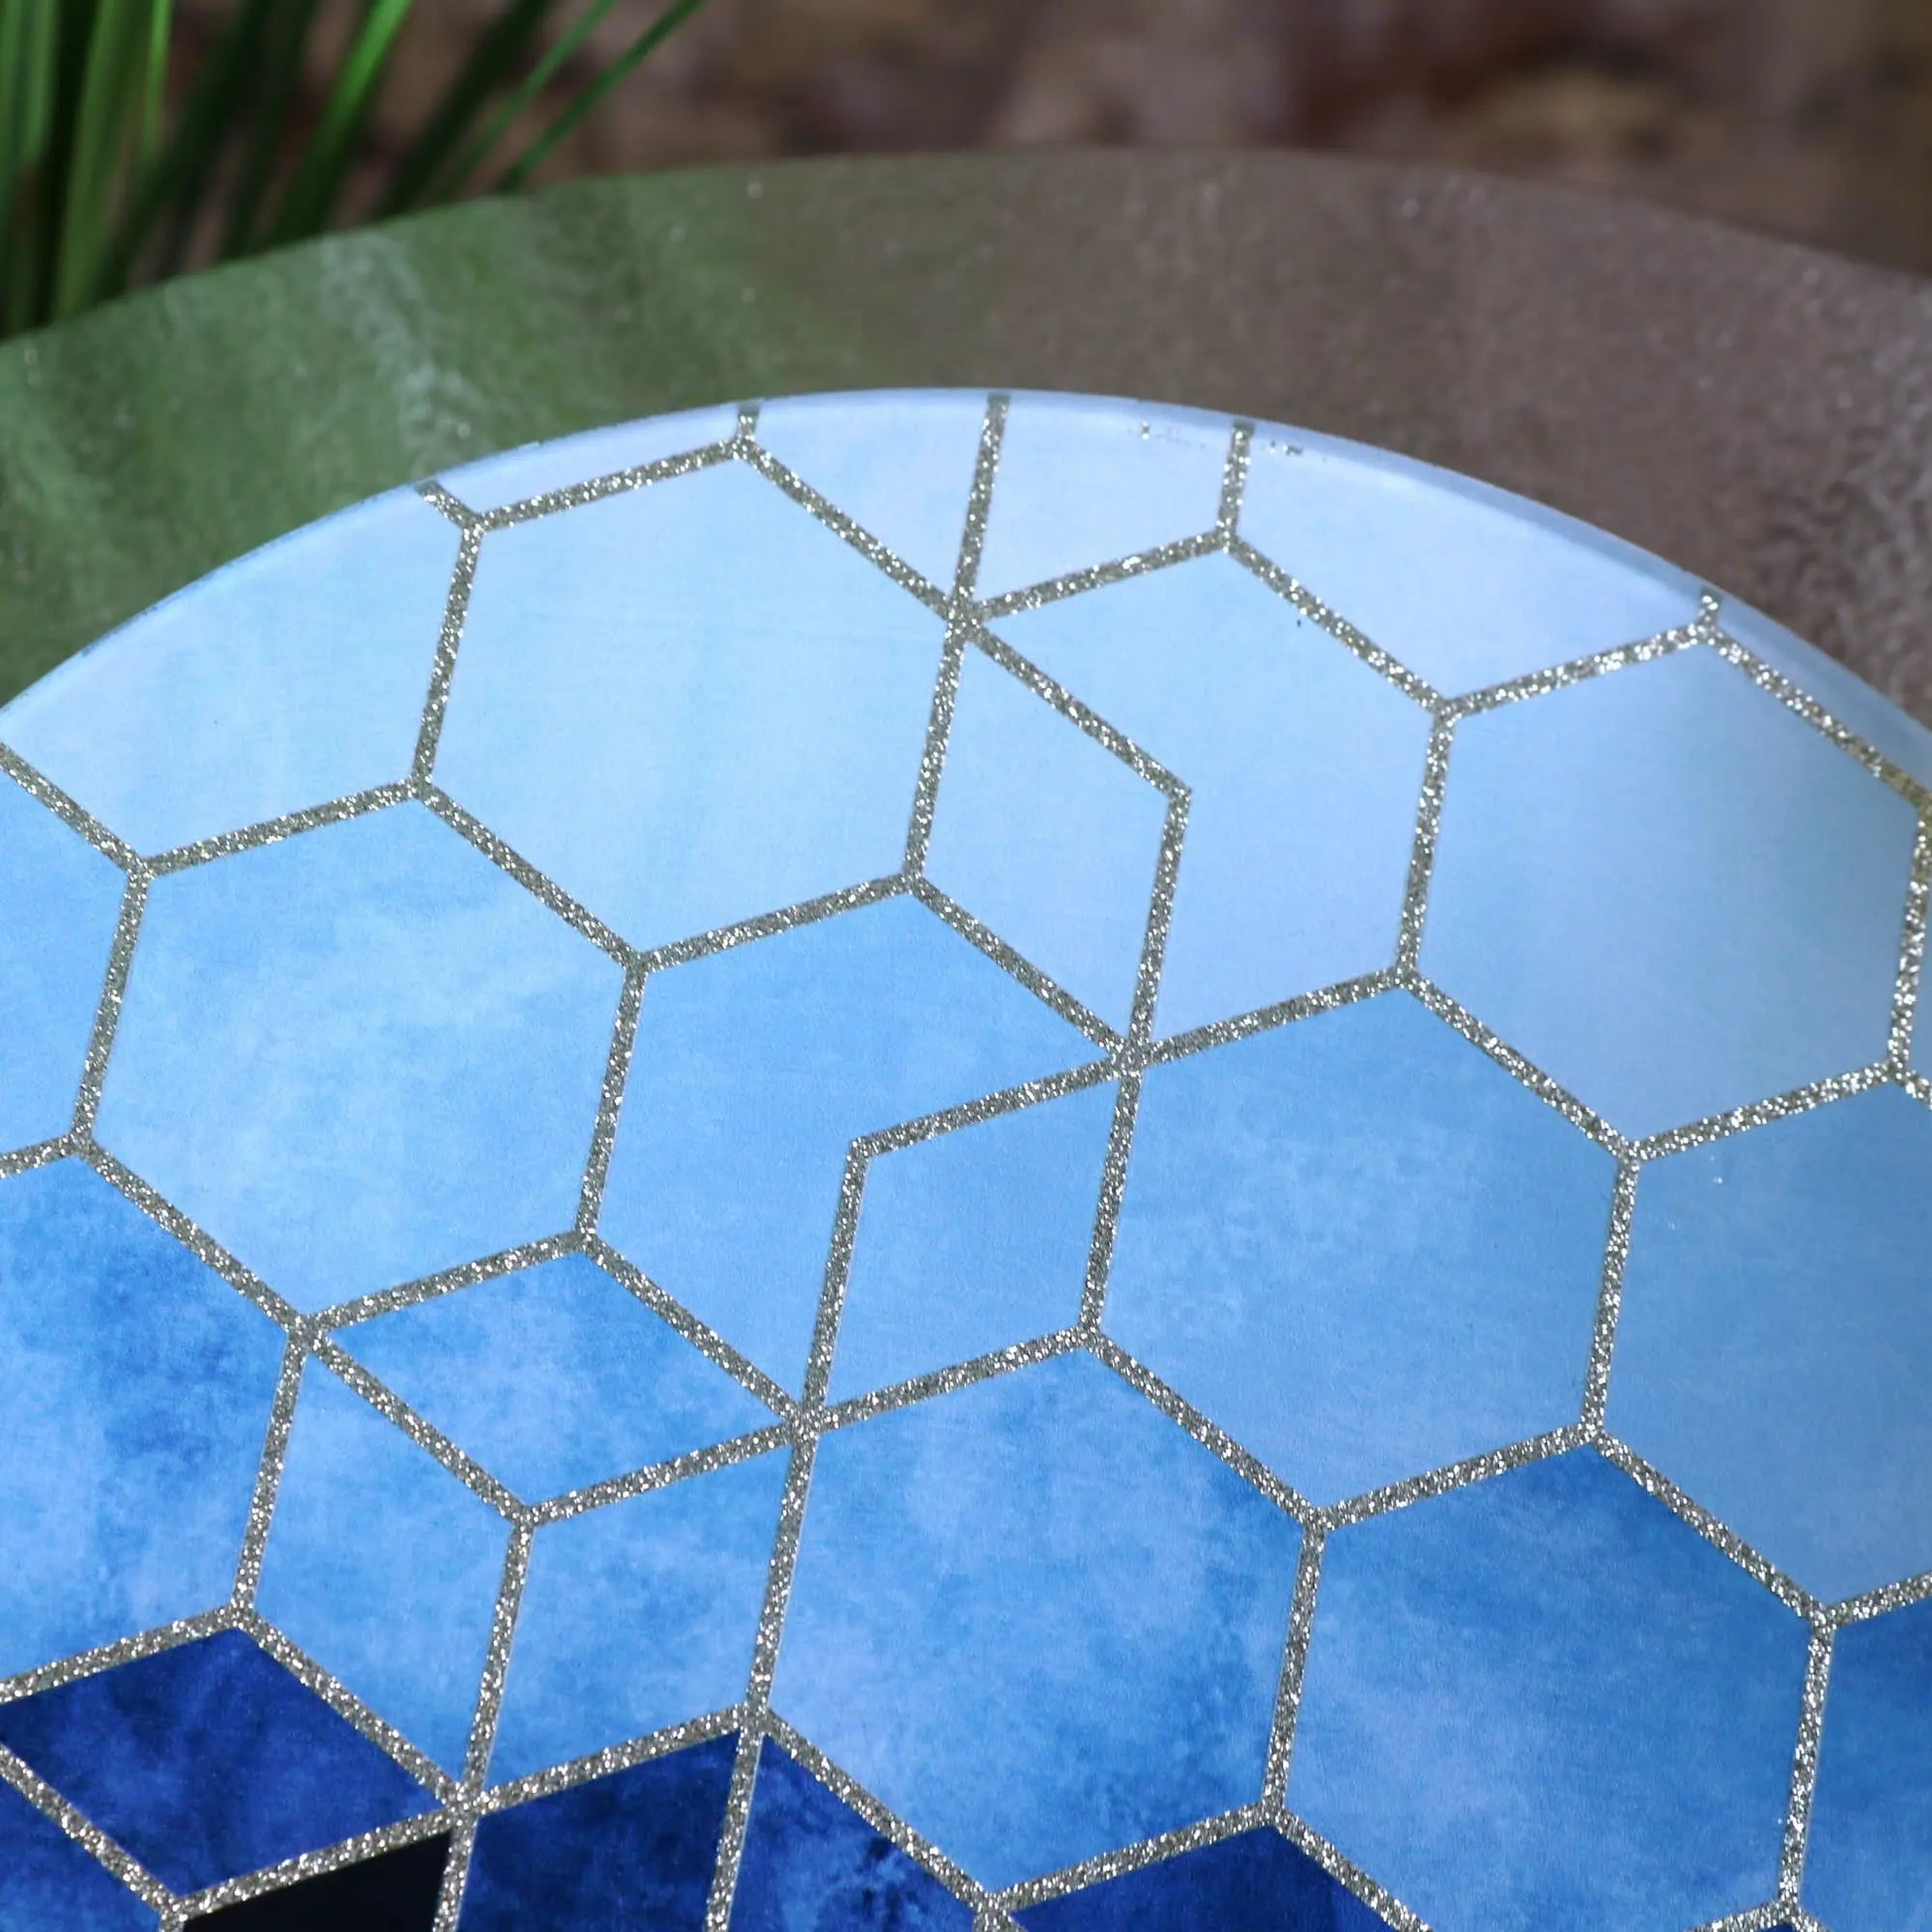 Konark Geometric Candle Design Plate - Top Section Closeup